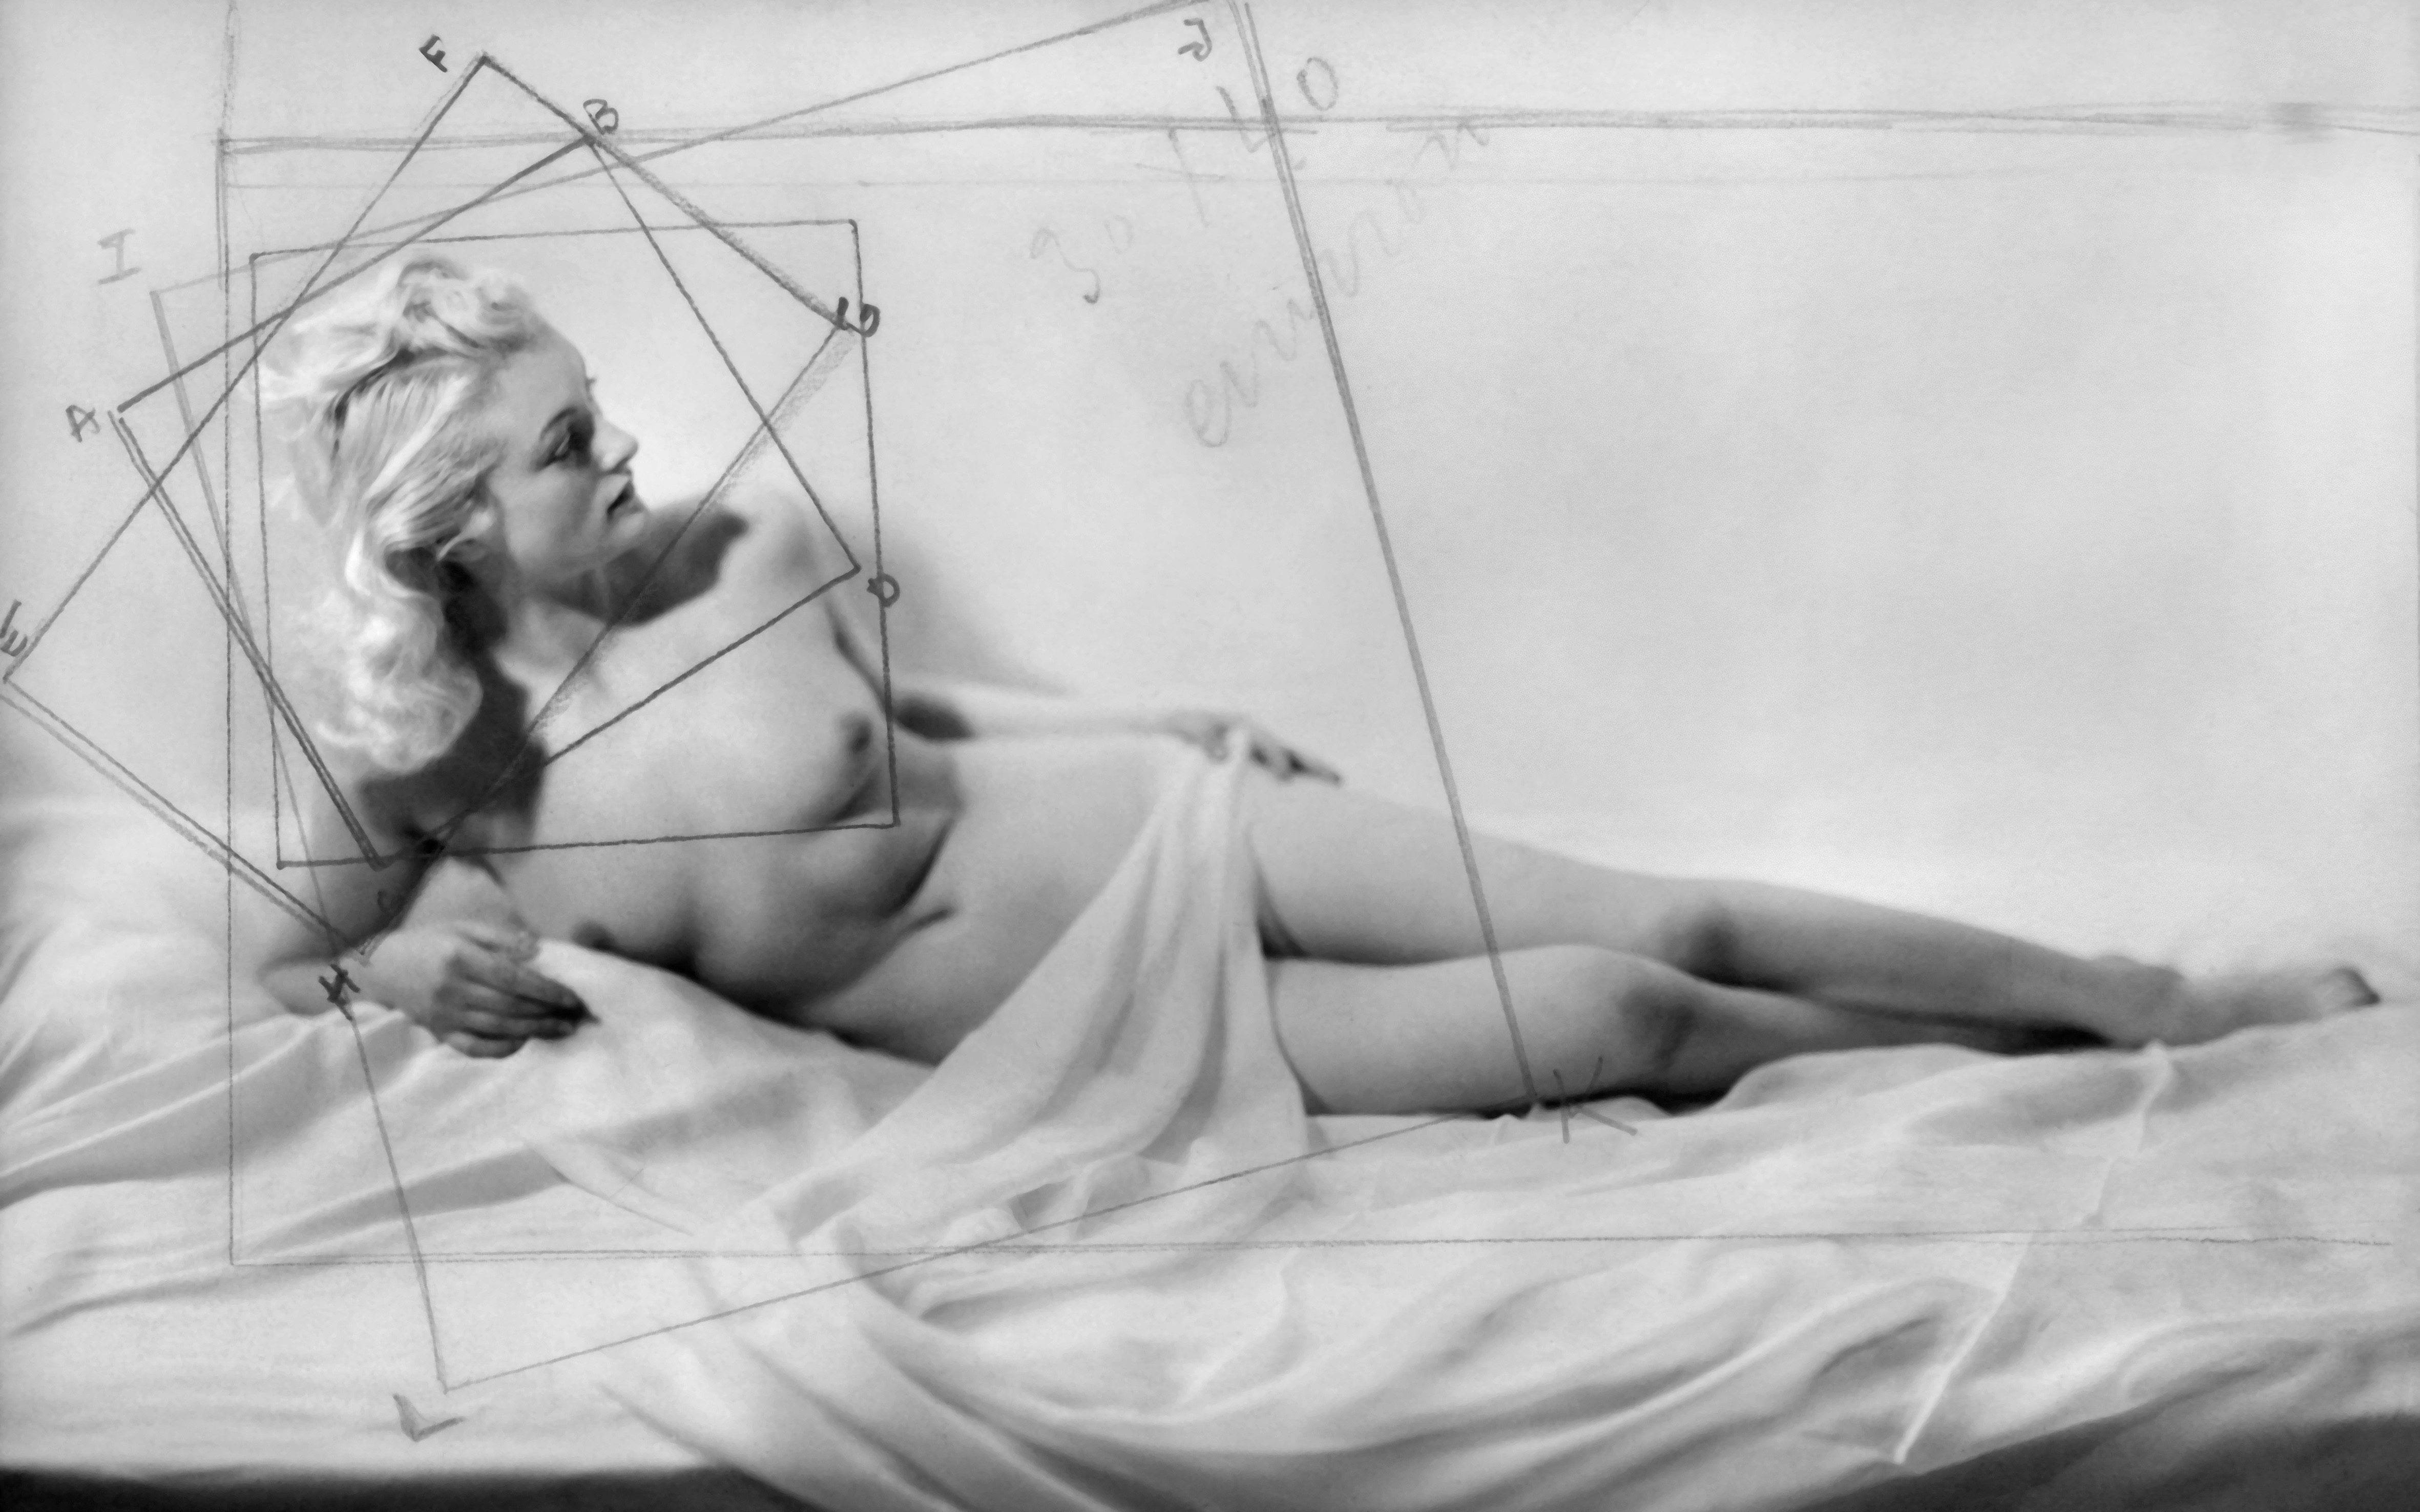 Etude de nu féminin, France, 1941 © Laure Albin Guillot / Roger-Viollet